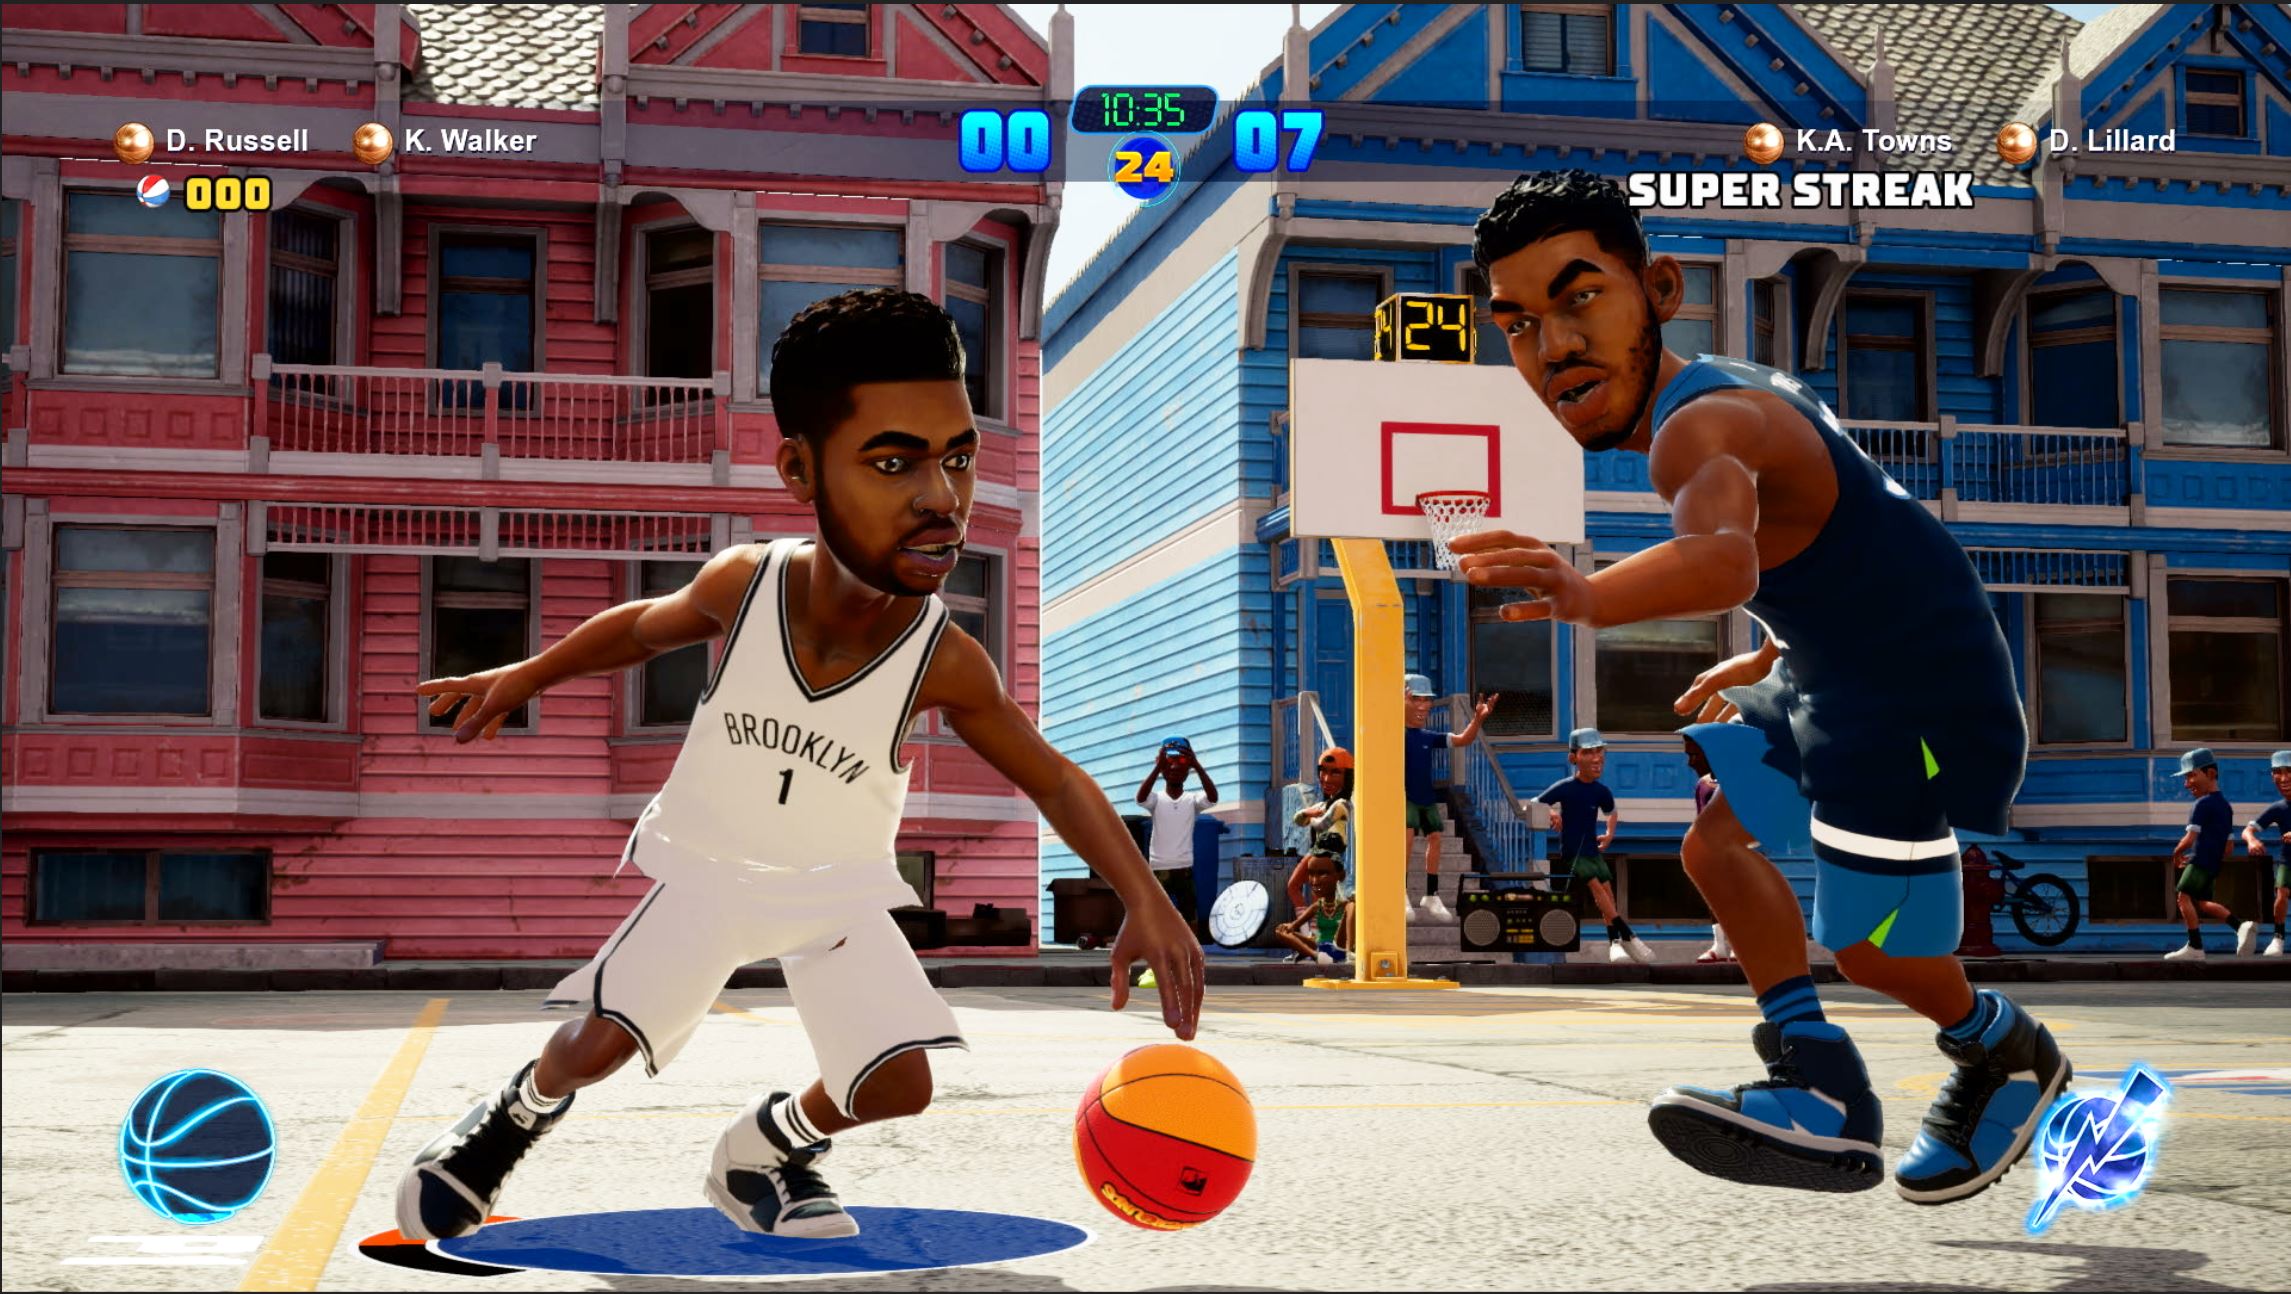 《NBA 2K欢乐竞技场2》发售日公布 登陆PC,PS4,XB1,Switch